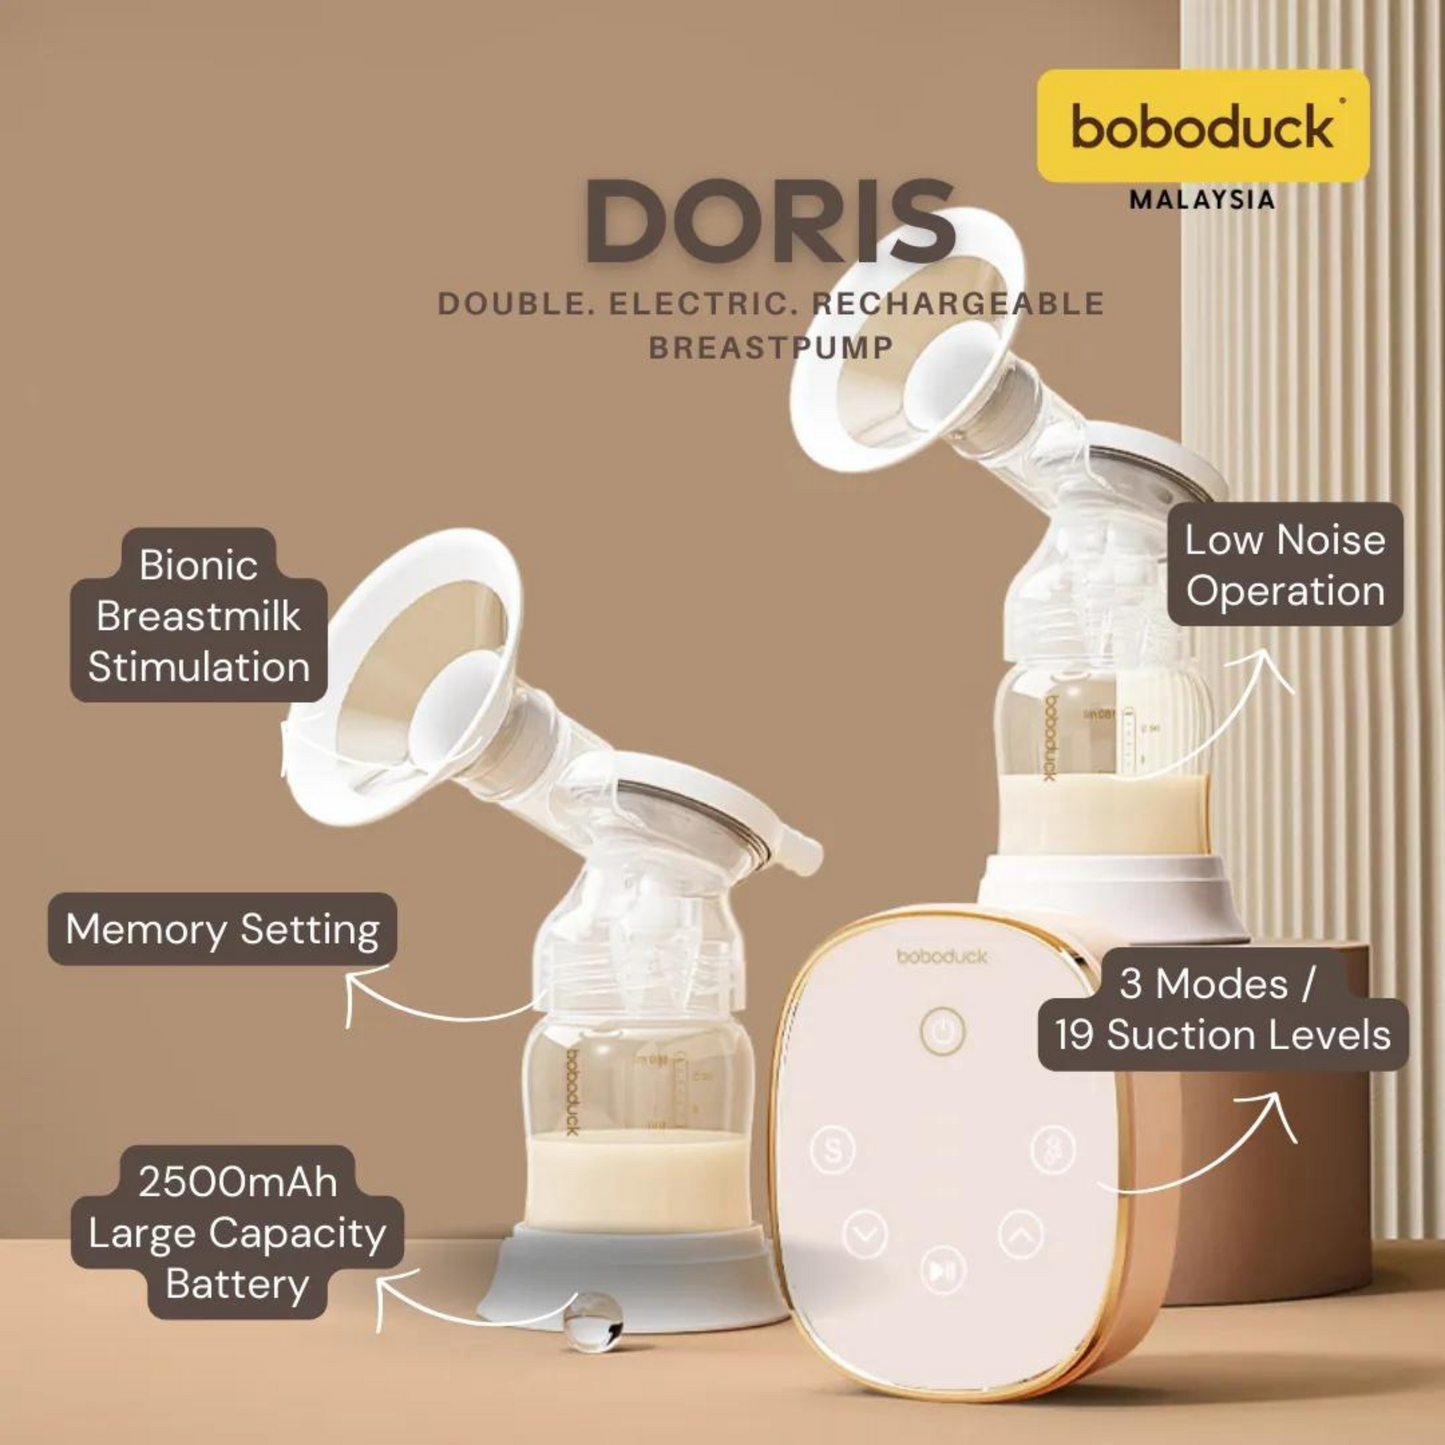 Boboduck Doris Double Rechargeable Breast pump